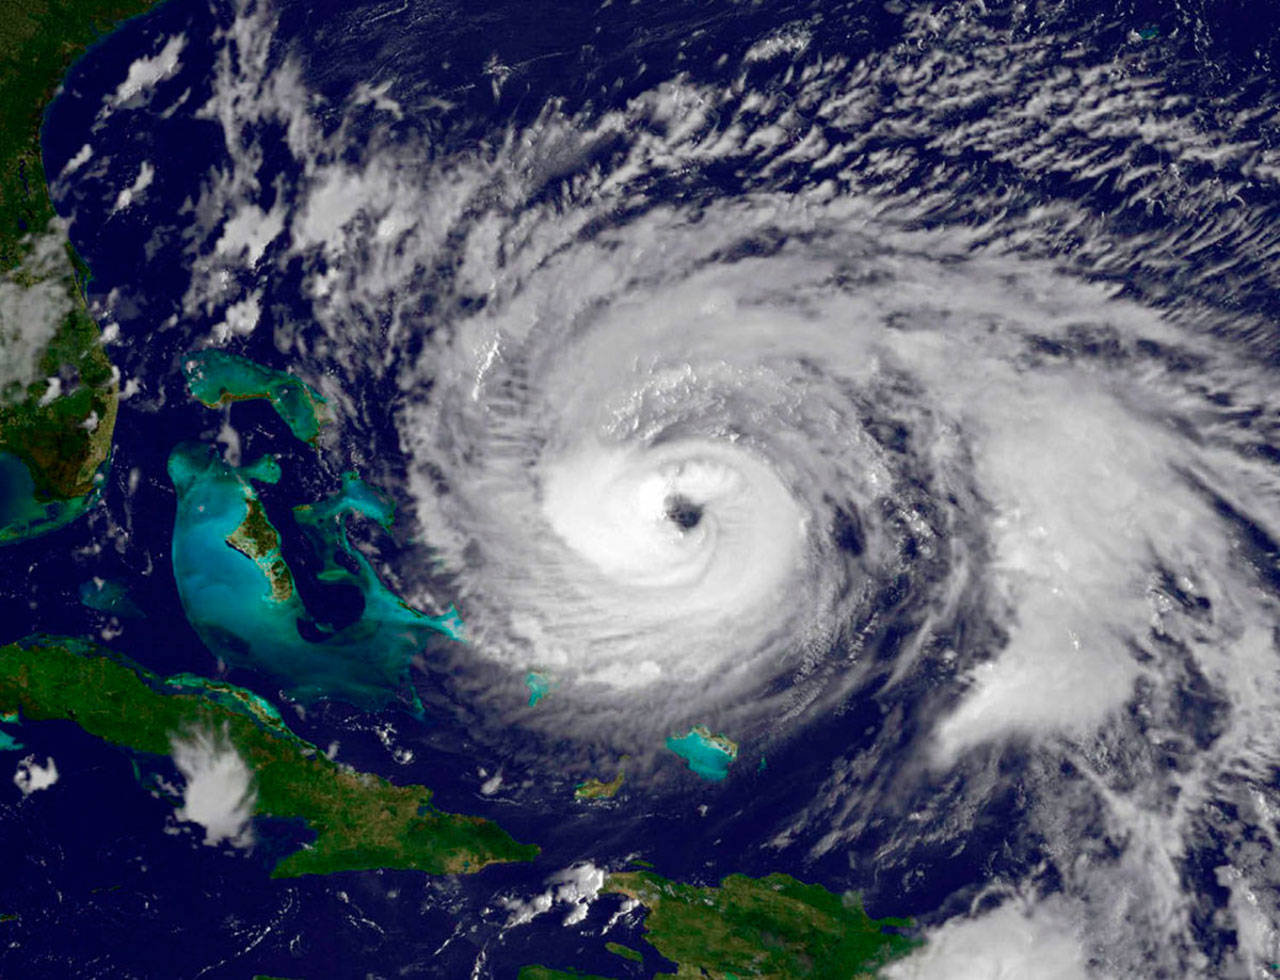 An image of Hurricane Maria. Image courtesy of NASA.gov